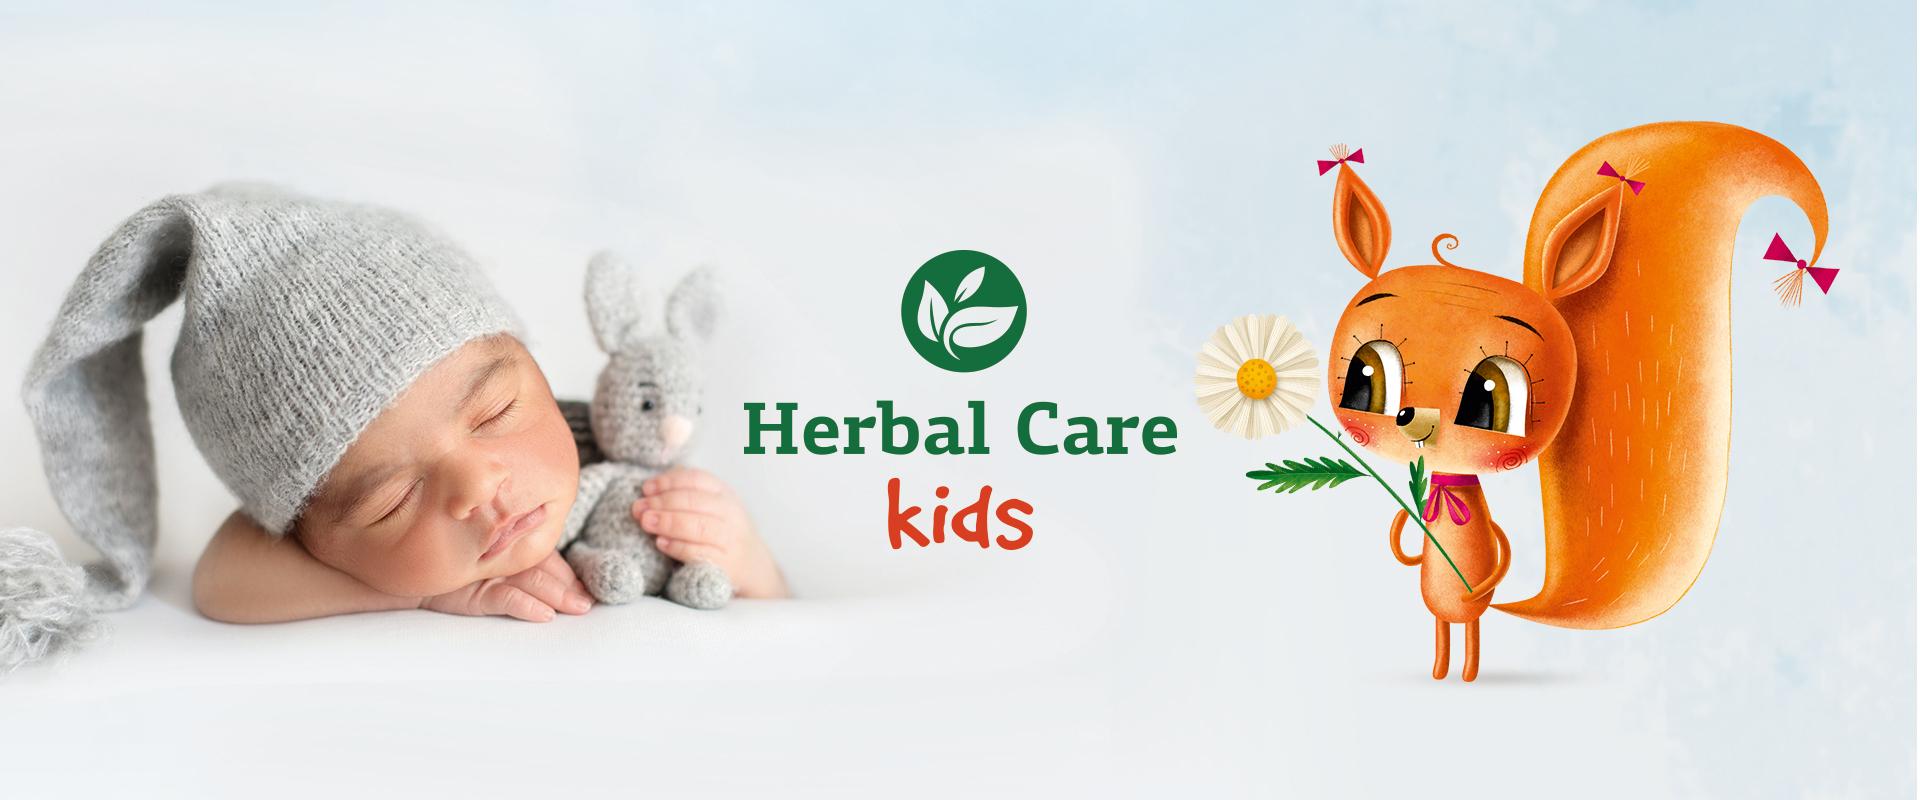 LCA 2021: Choice for Kids - Farmona Herbal Care Kids